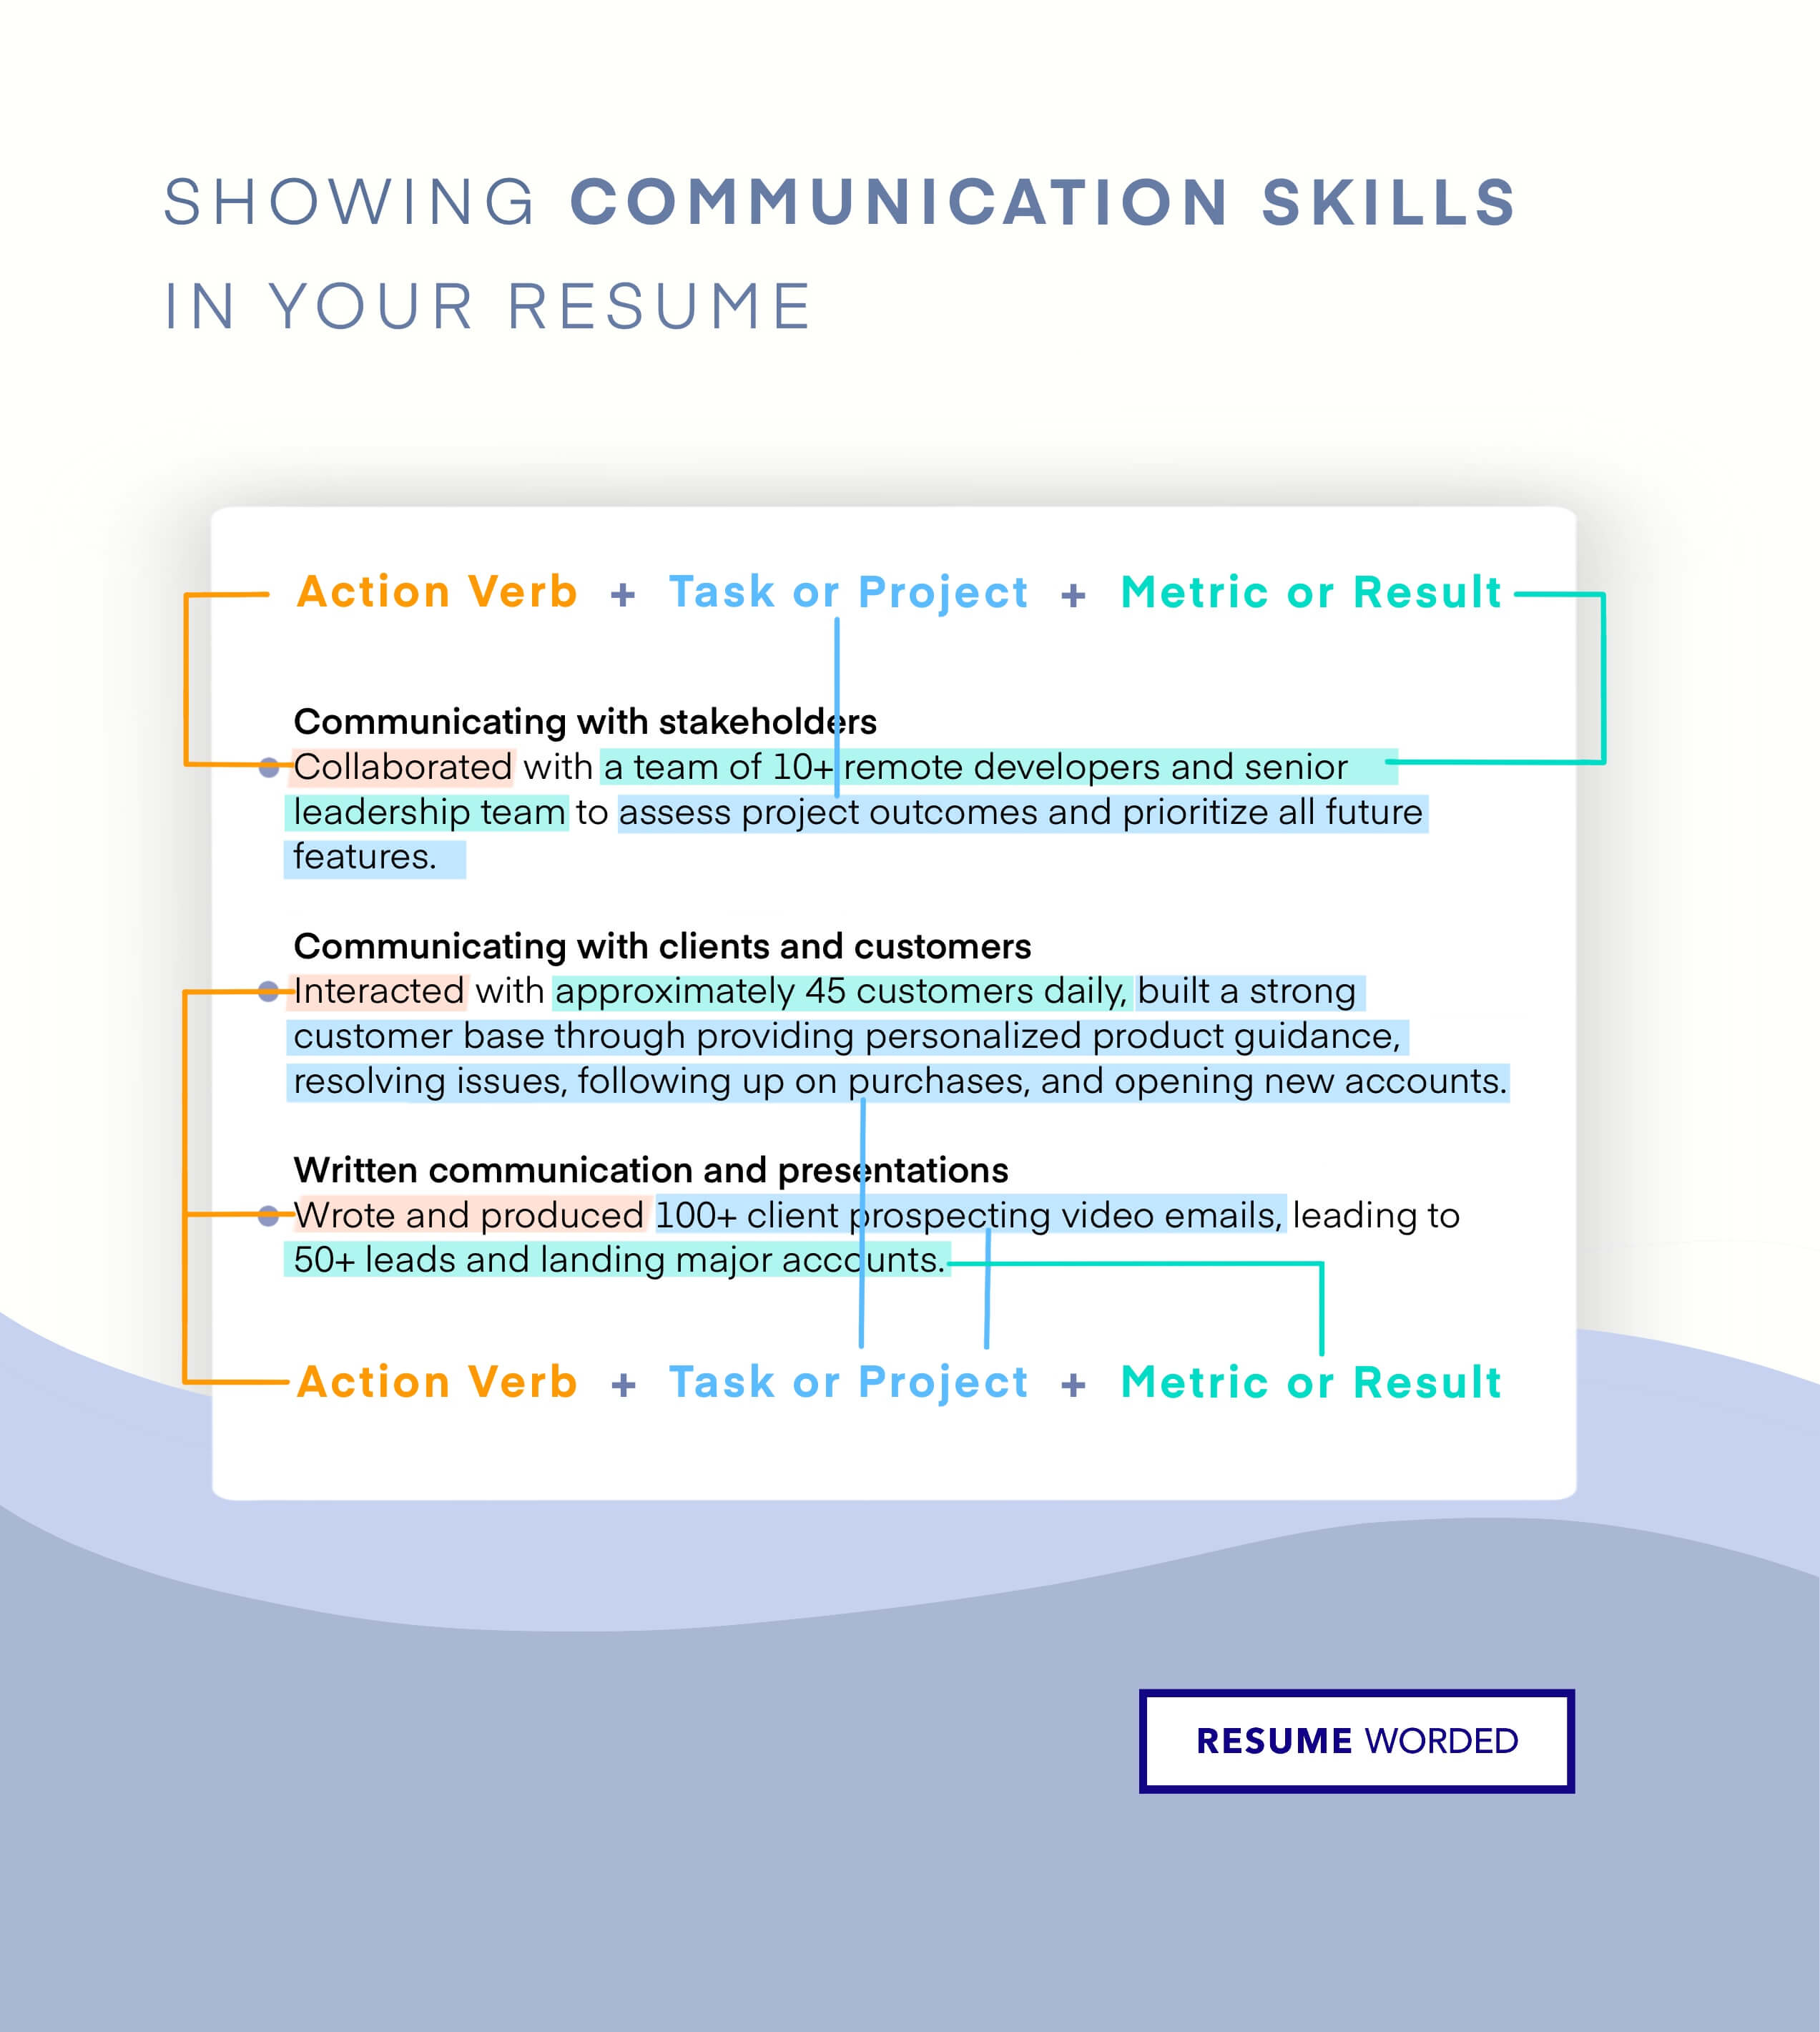 Showcase your leadership and communication skills - Program Manager Scrum Master CV